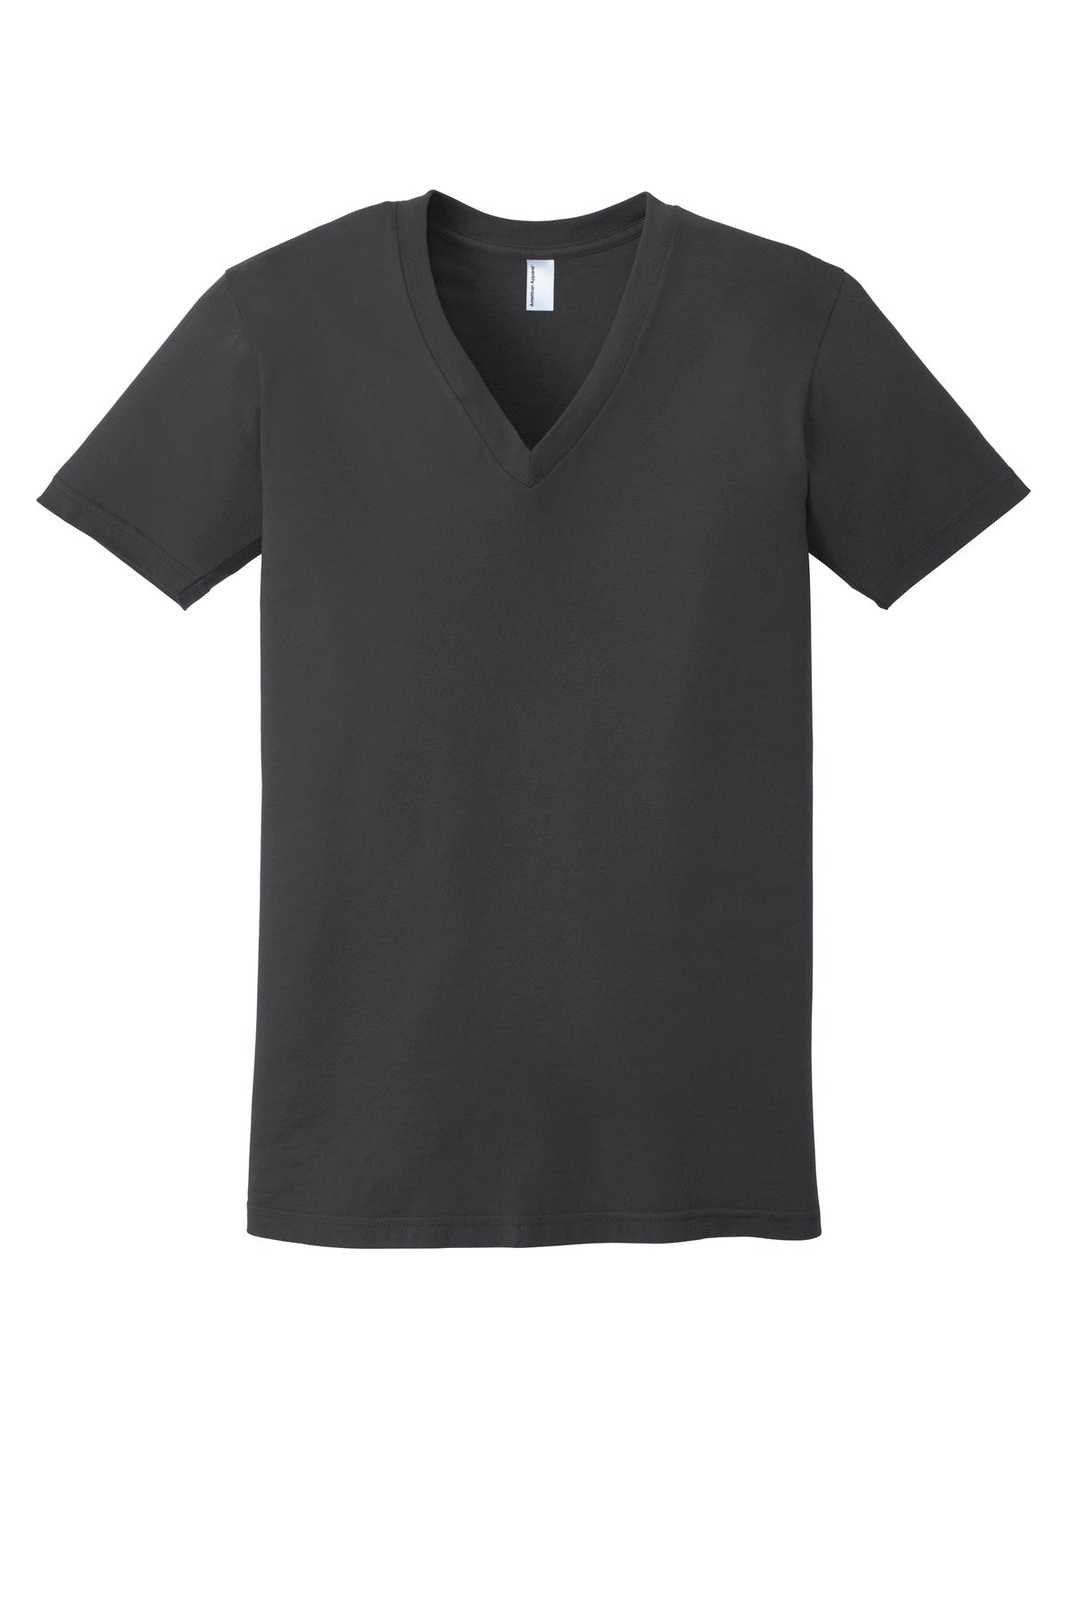 American Apparel 2456W Fine Jersey V-Neck T-Shirt - Asphalt - HIT a Double